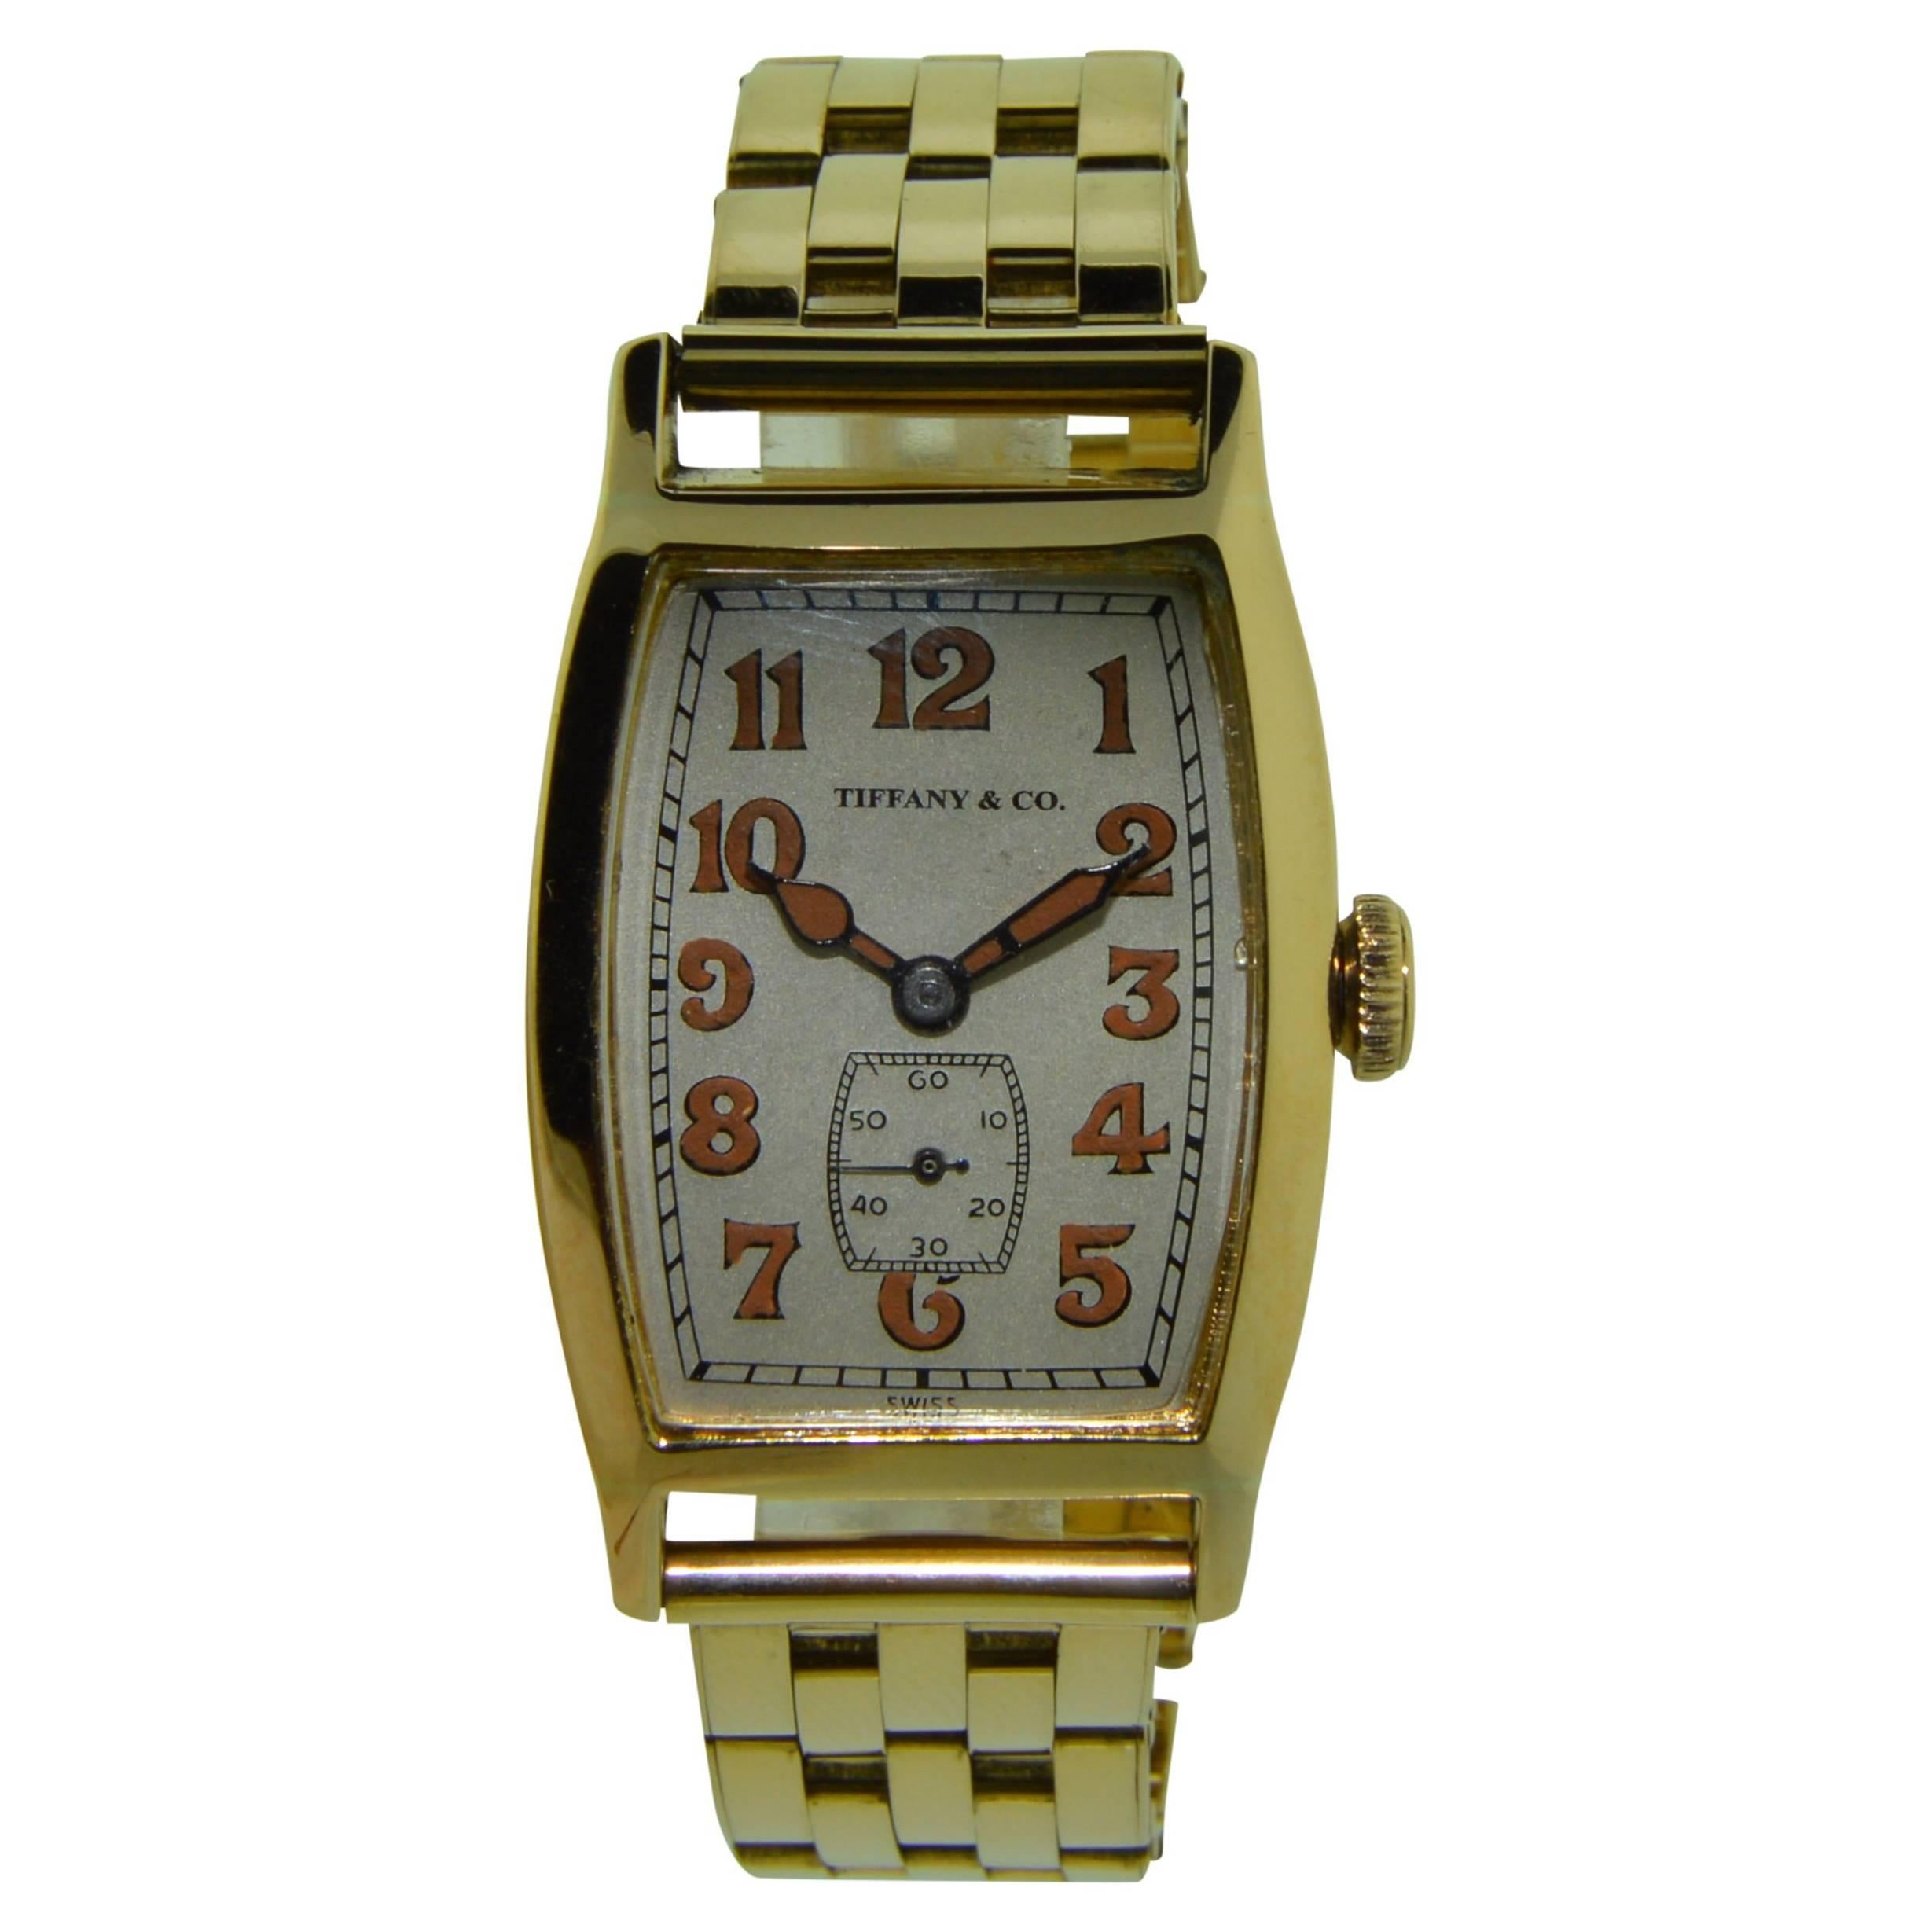 Tiffany & Co. by Longines Watch Co. Yellow Gold Tonneau Shape Watch